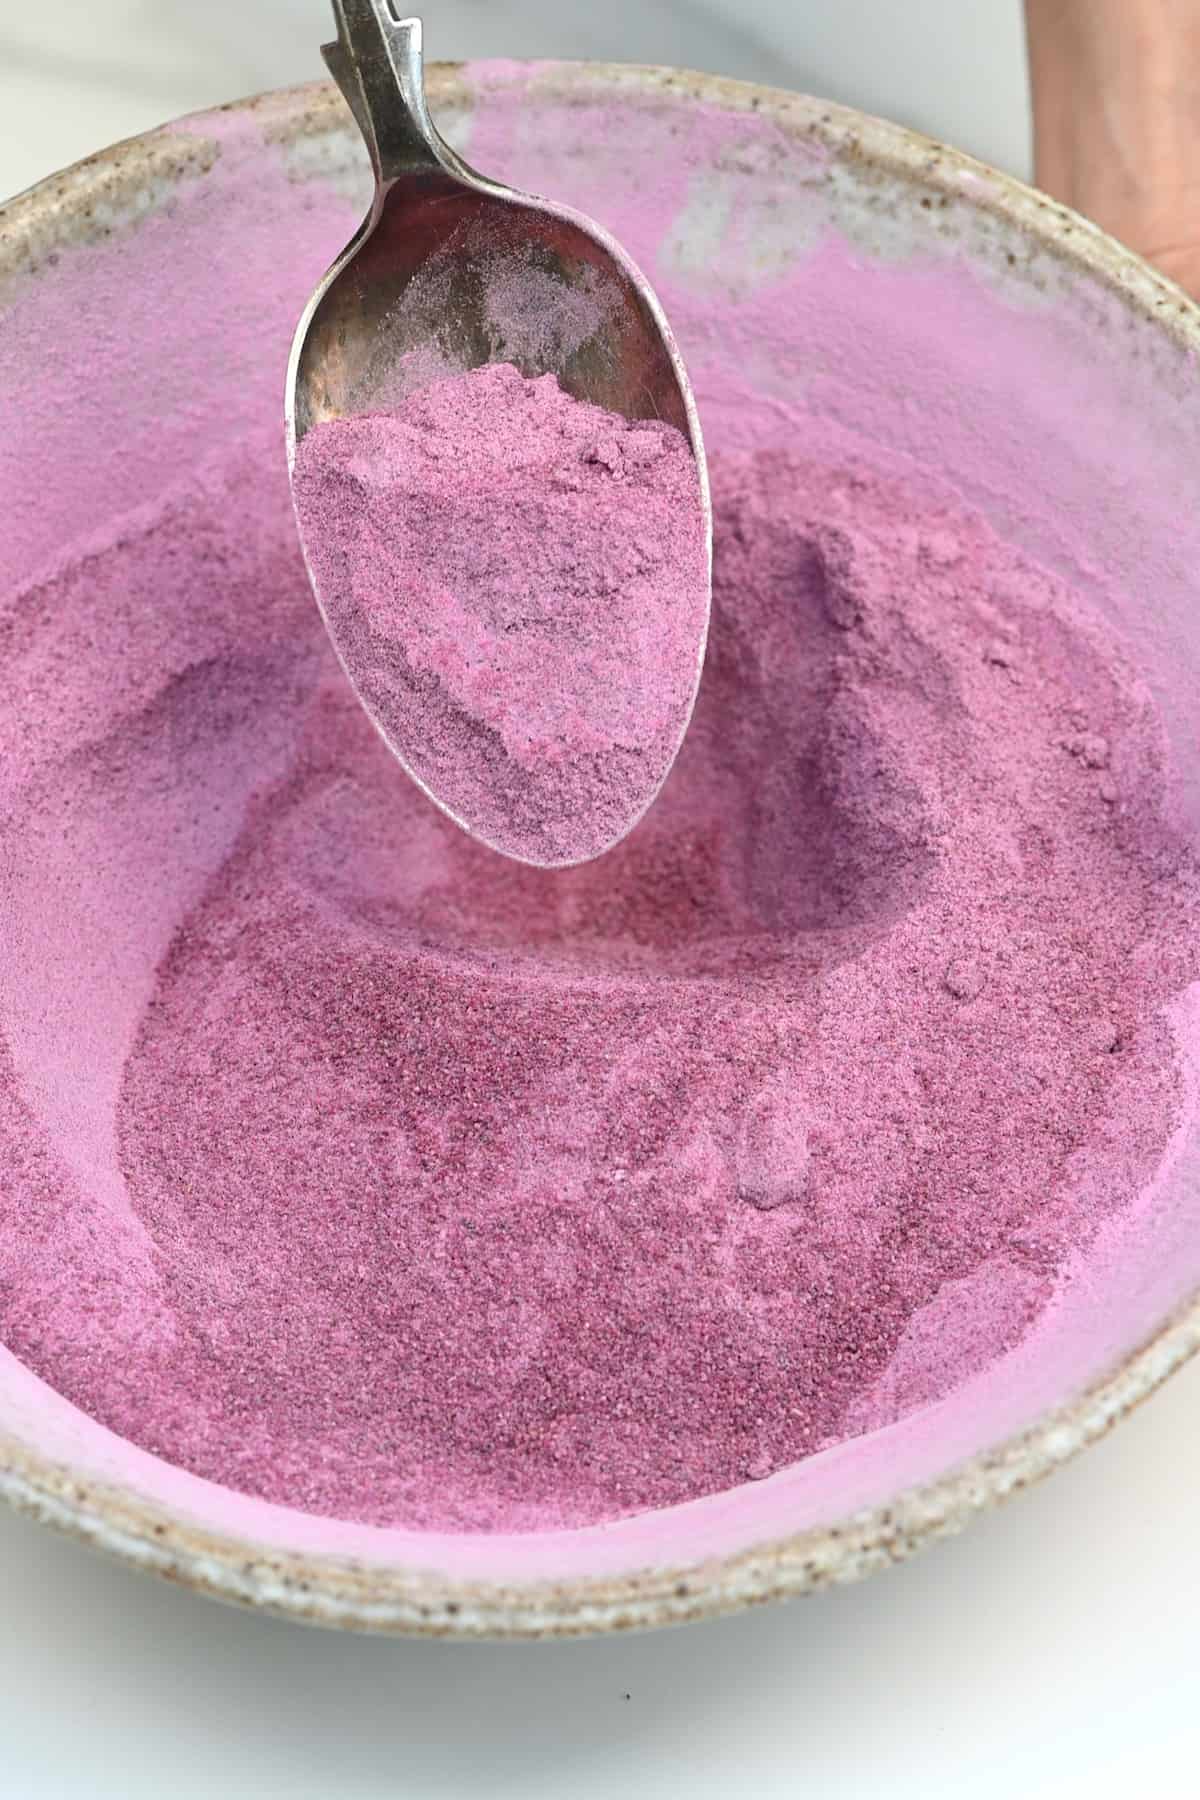 A spoonful of purple potato powder